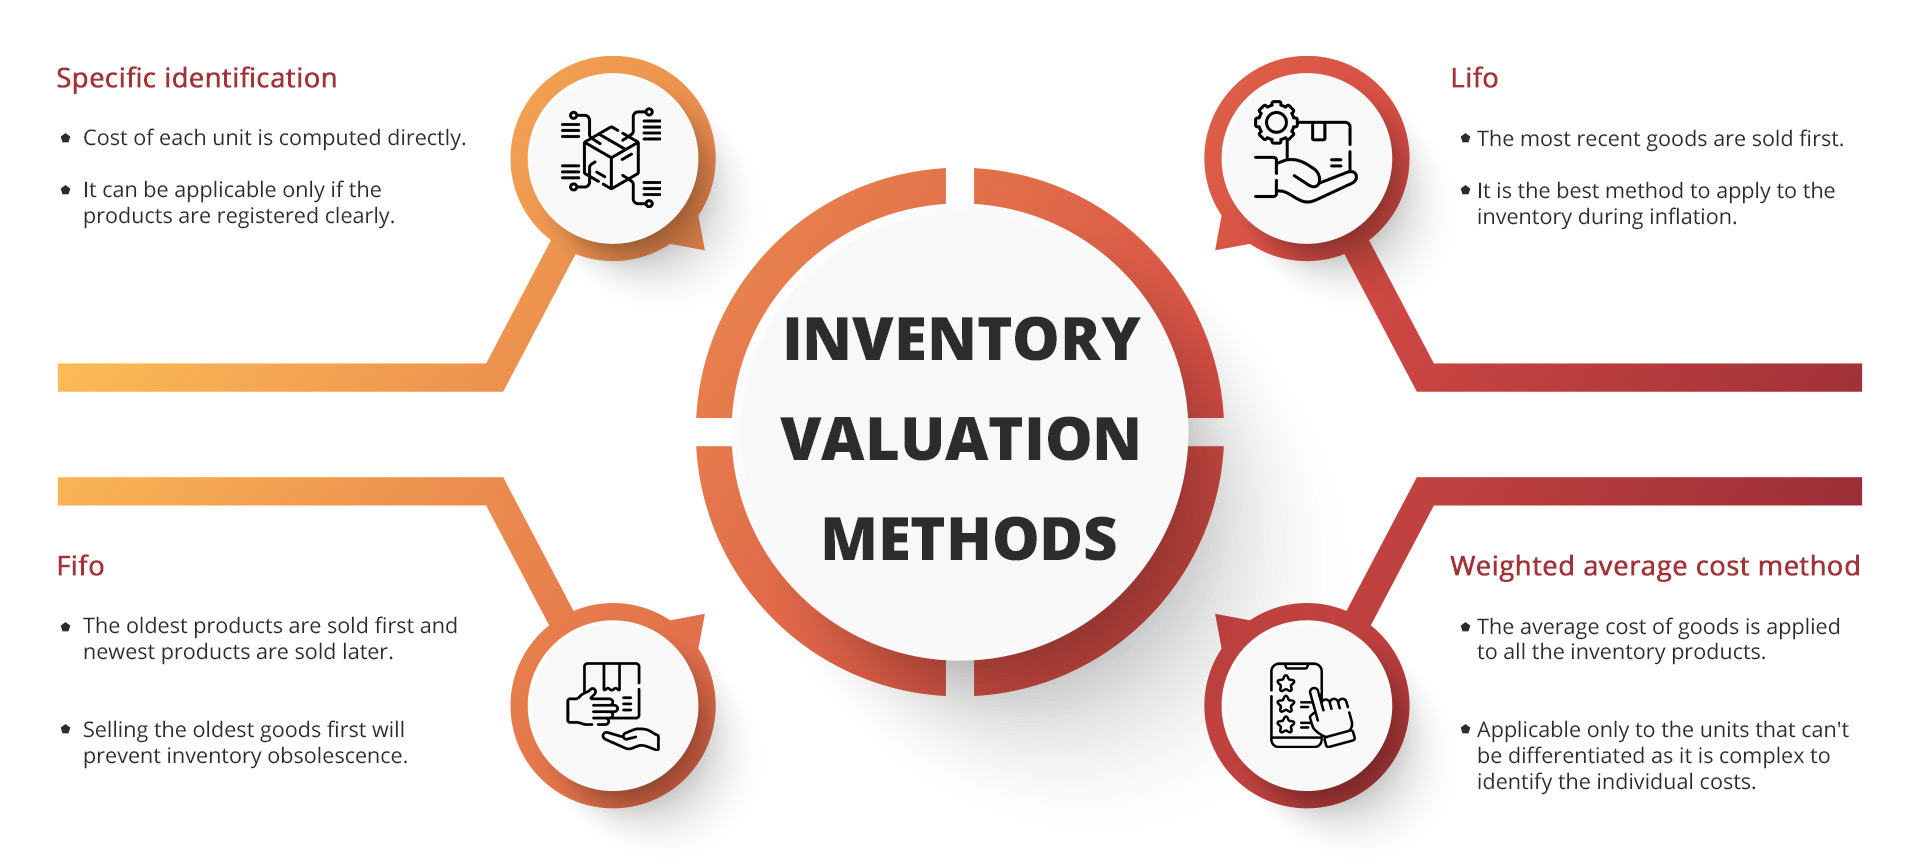 Inventory valuation methods